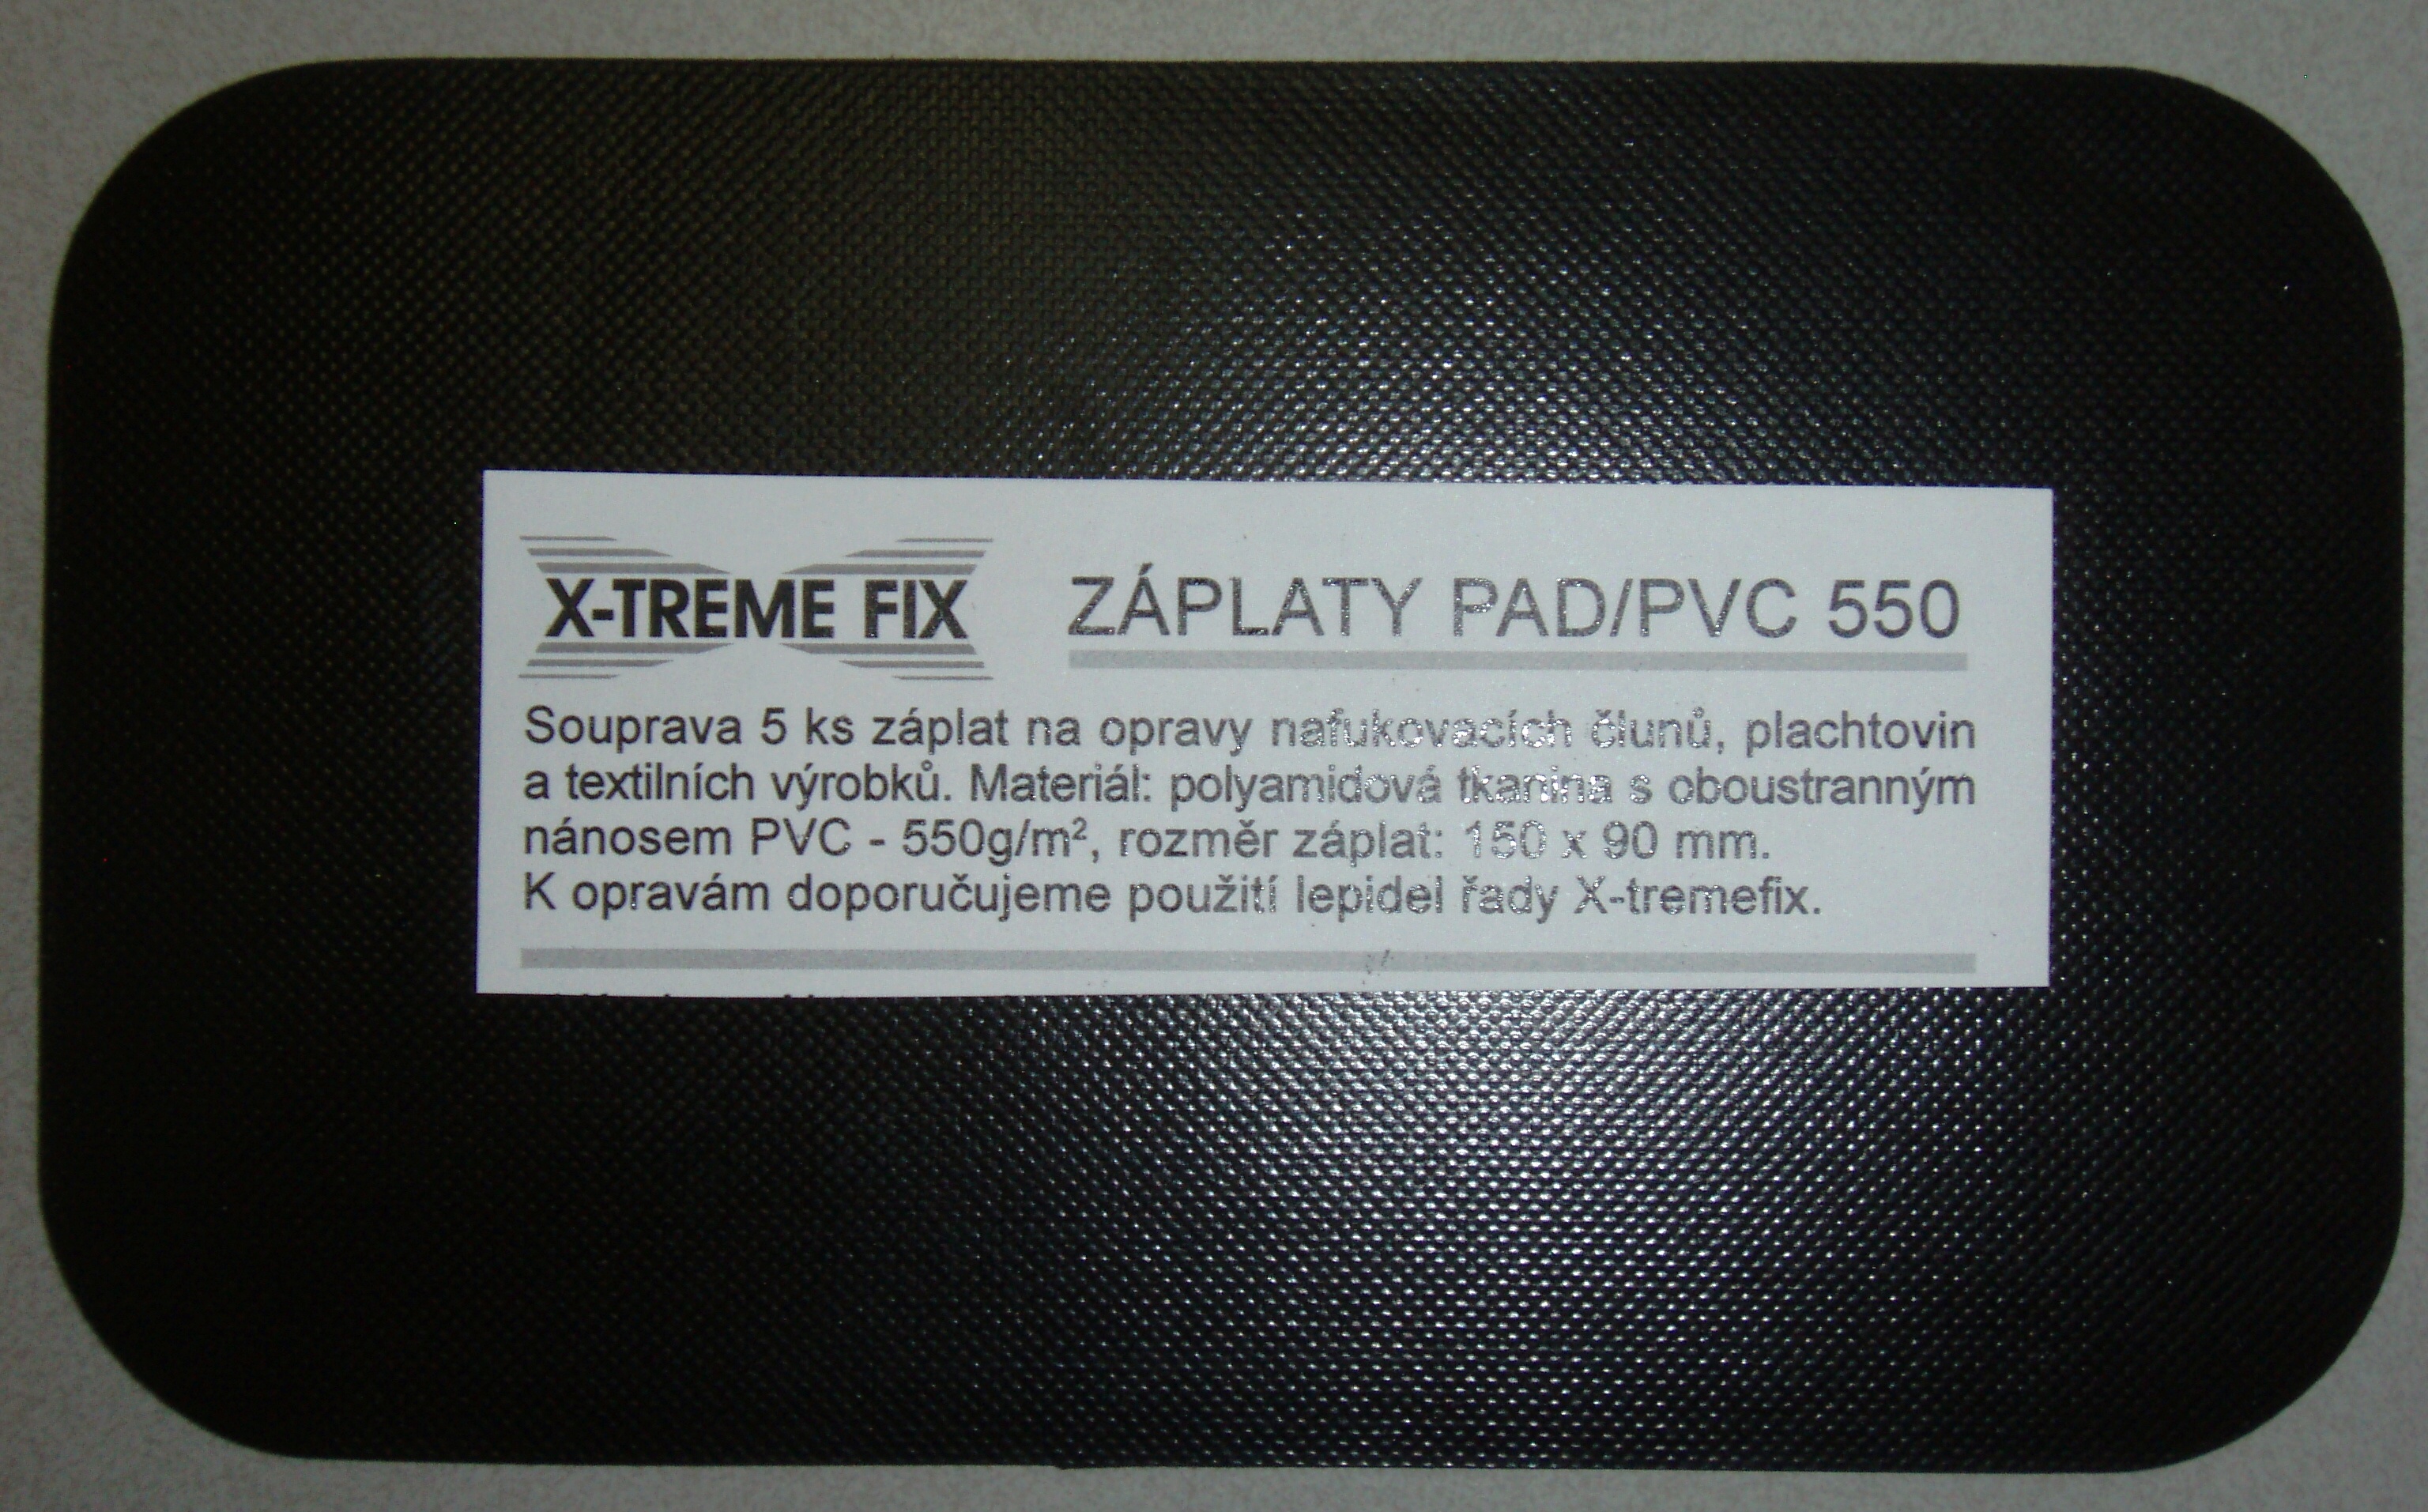 X-tremefix servisní záplata.JPG